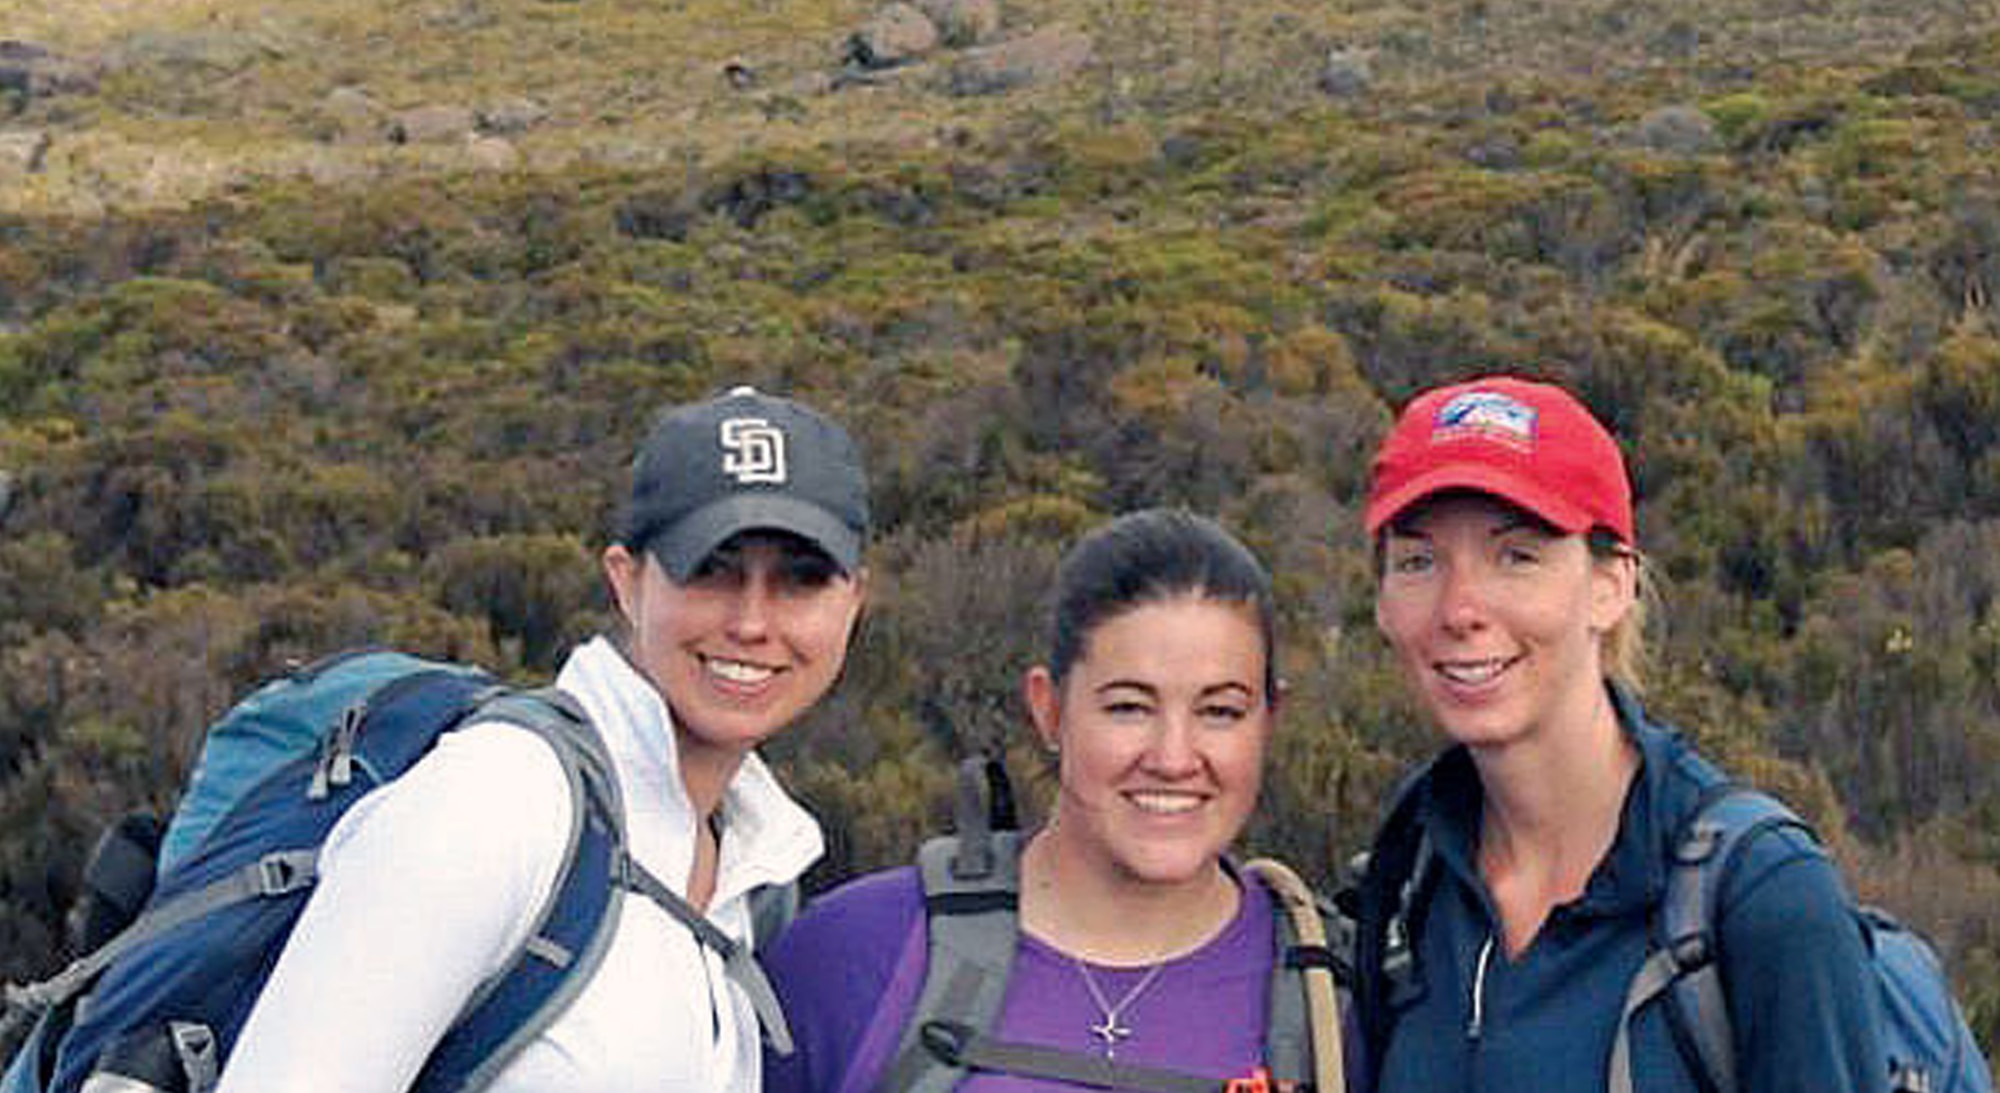 Maj. Lisa Reaver (center) poses with fellow climbers Lauren Drietzler (left) and Heather Ruhle after summiting Mount Kilimanjaro's Uhuru Peak. (Courtesy photo)